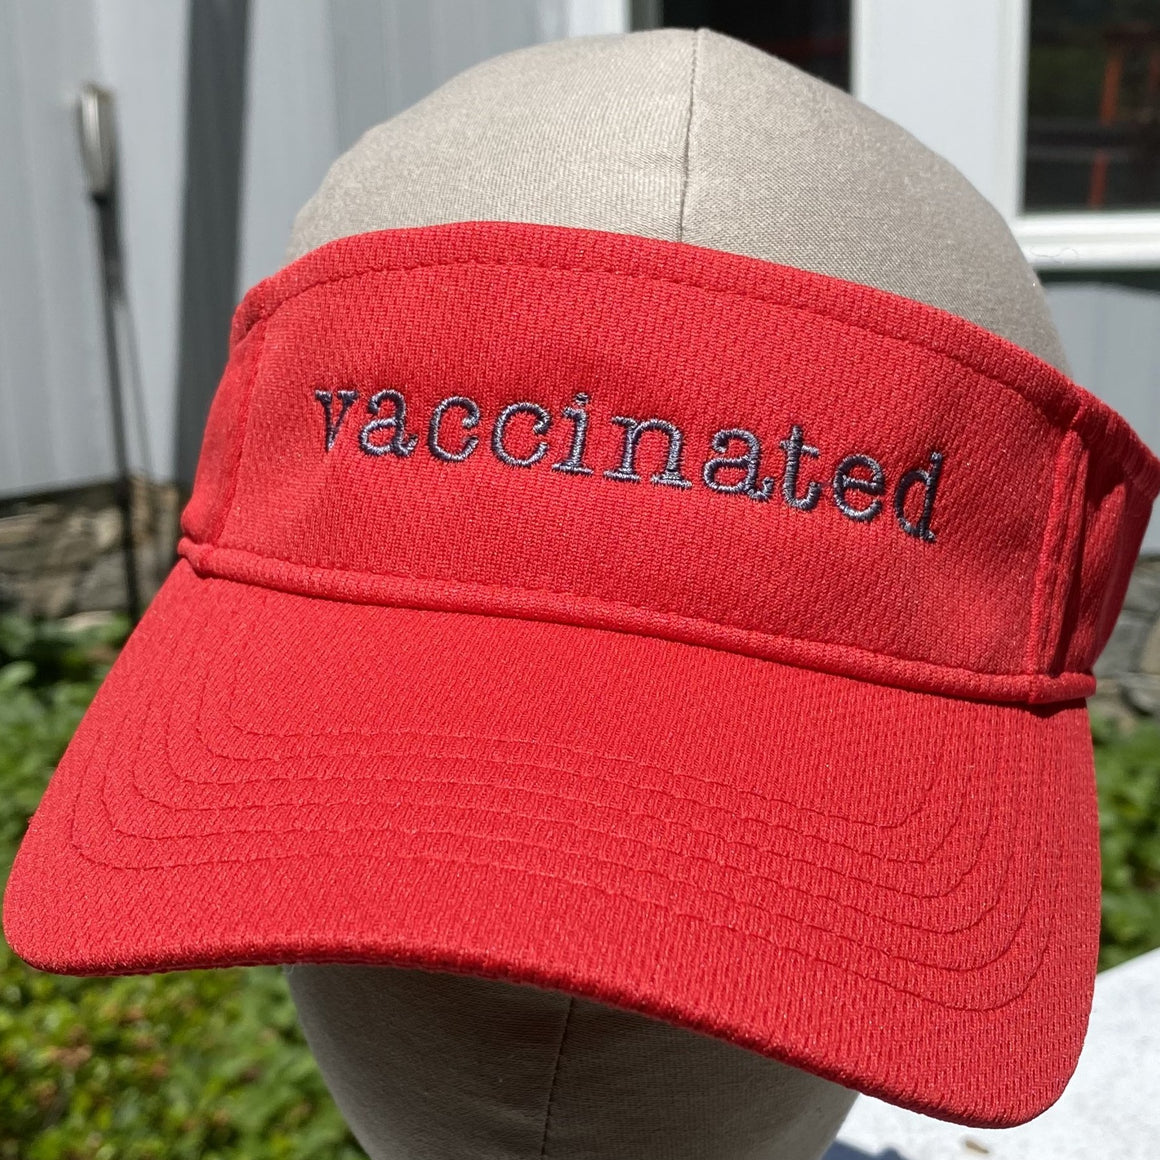 Vaccinated Wicking Fabric Sports Visor